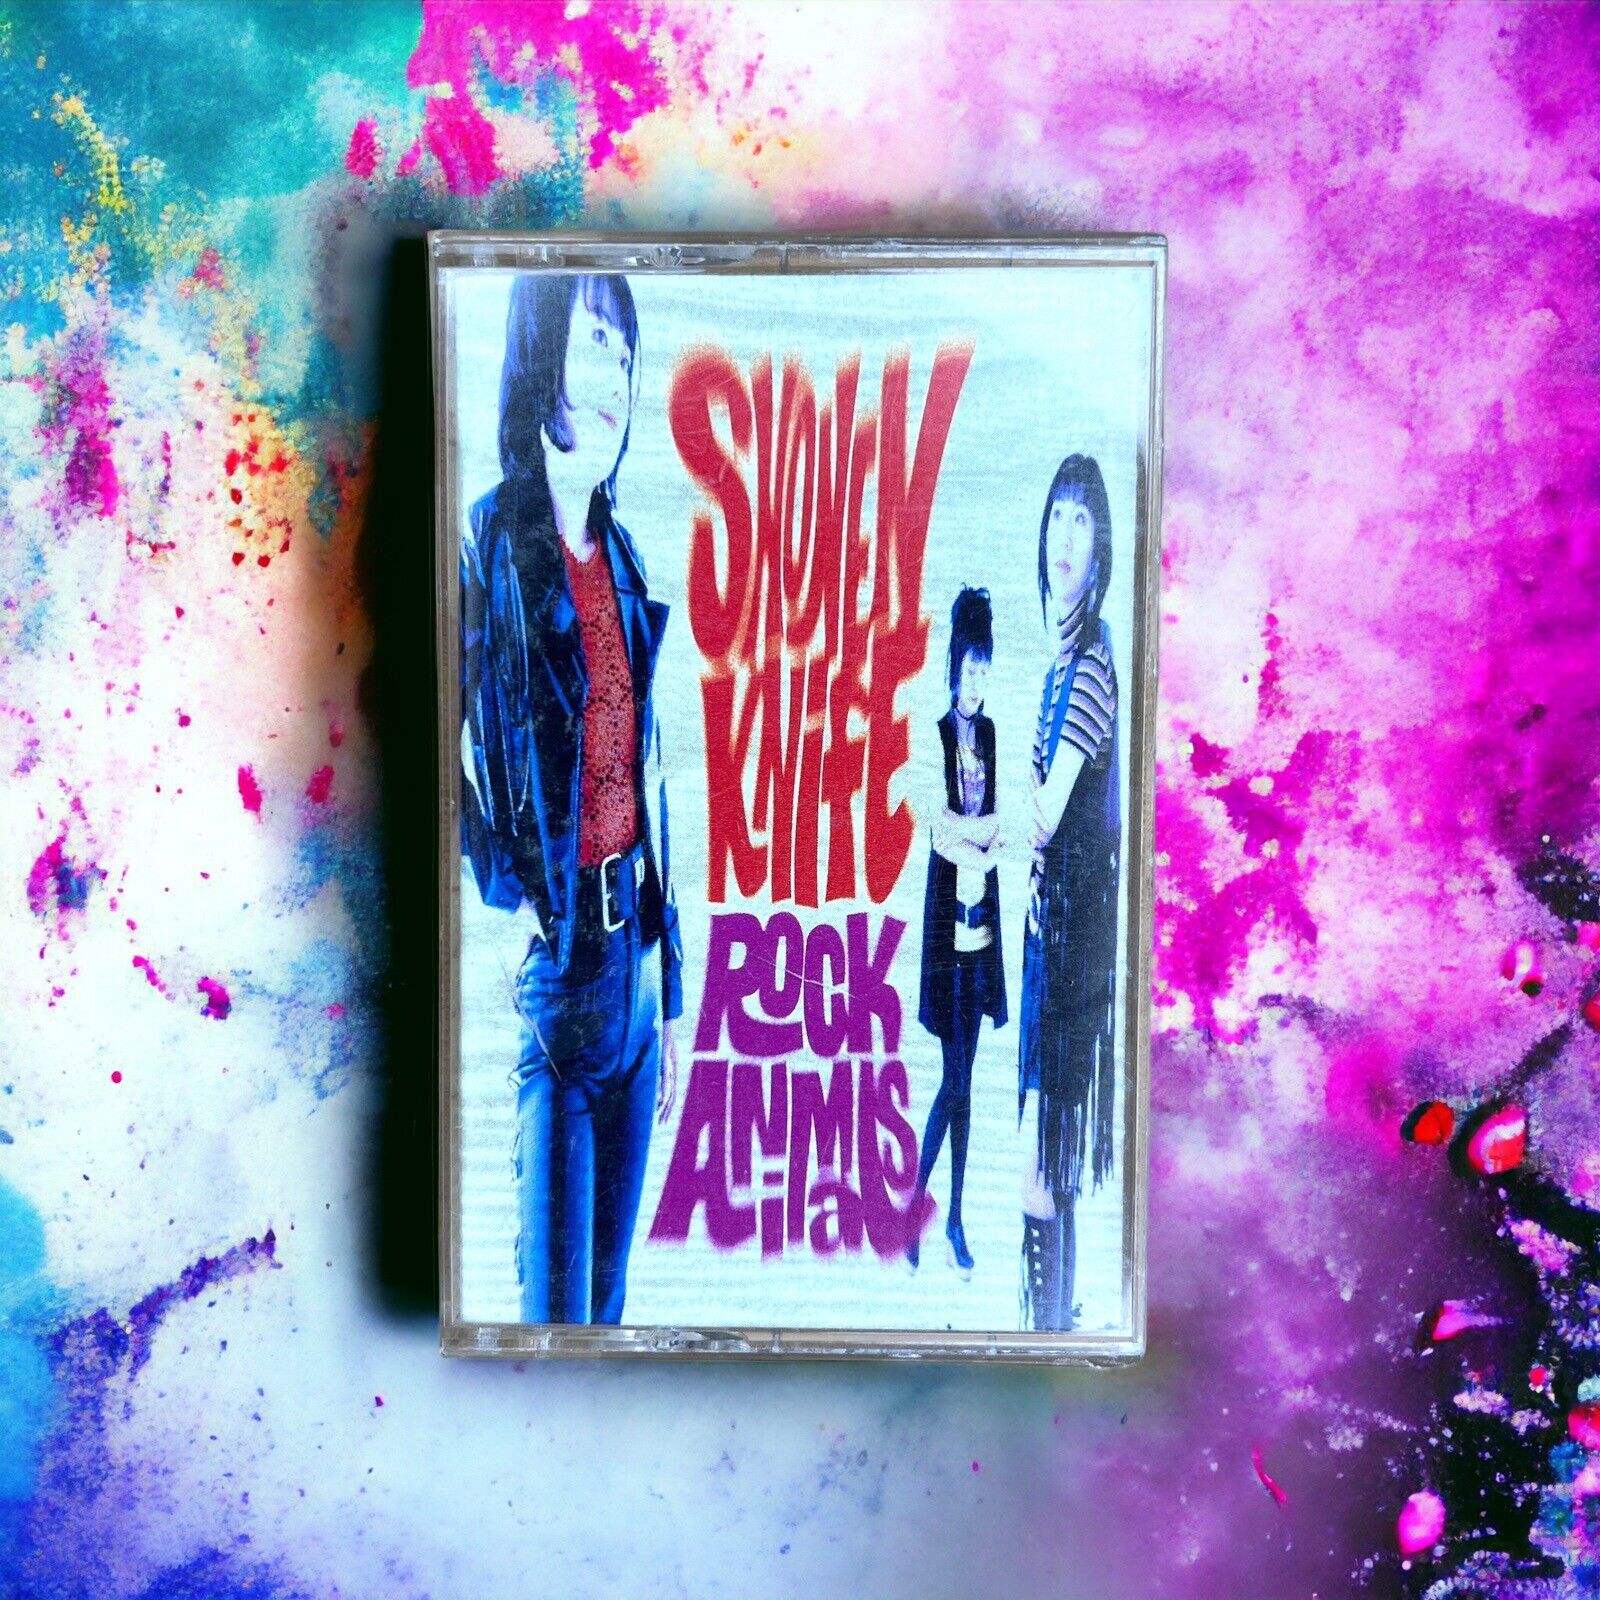 Shonen Knife – Rock Animals Cassette Rare 1993 Virgin Music Japan